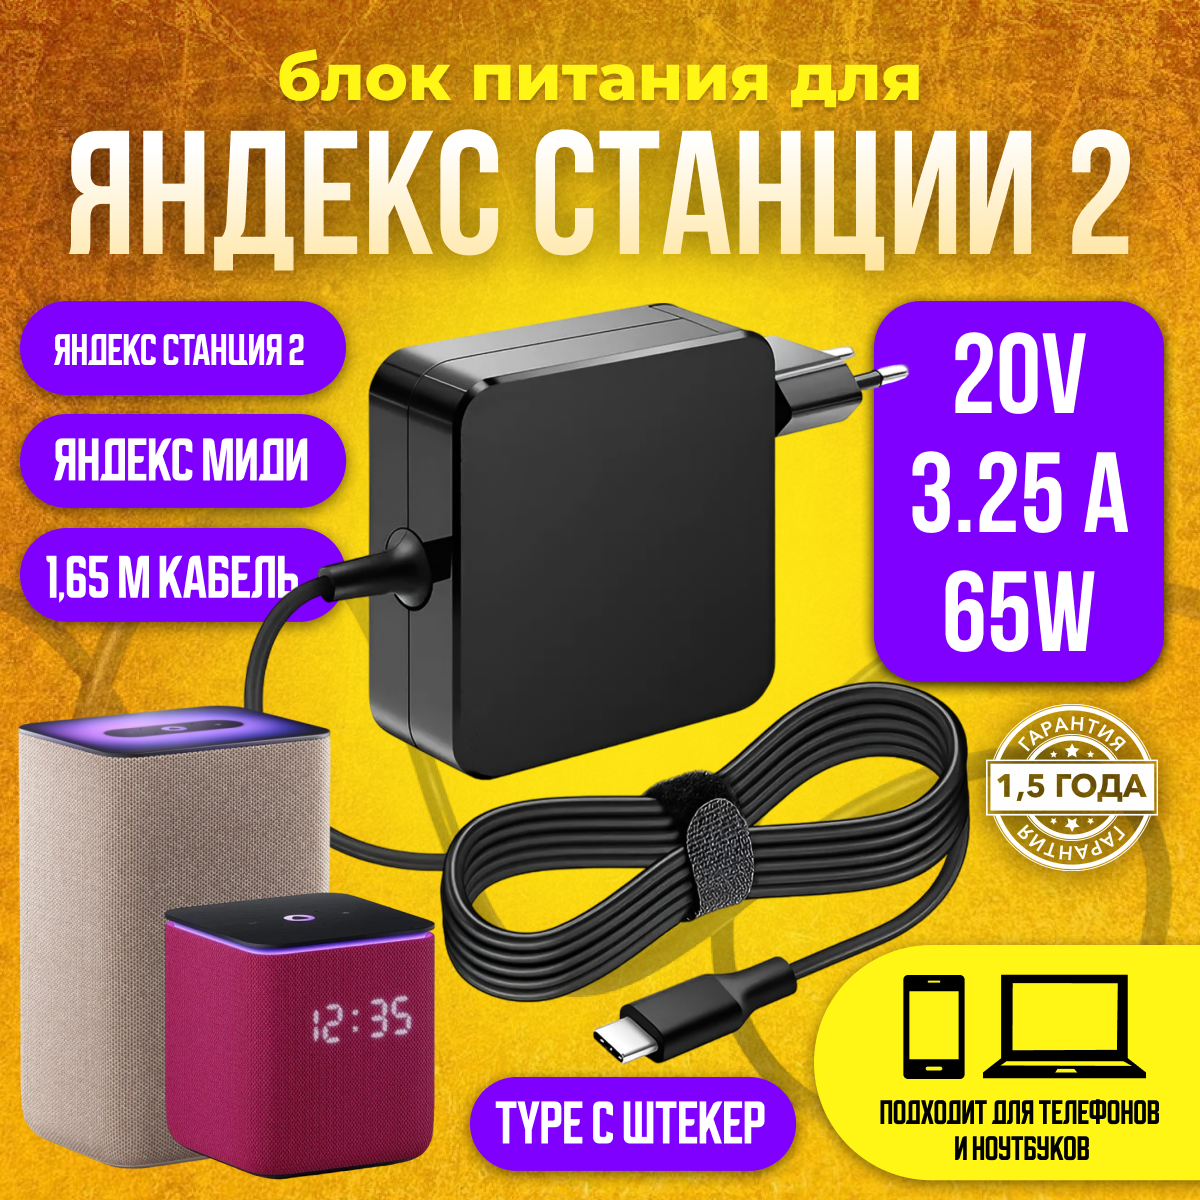 Блок питания для Яндекс Станции Макс 20V 3.25A 65W